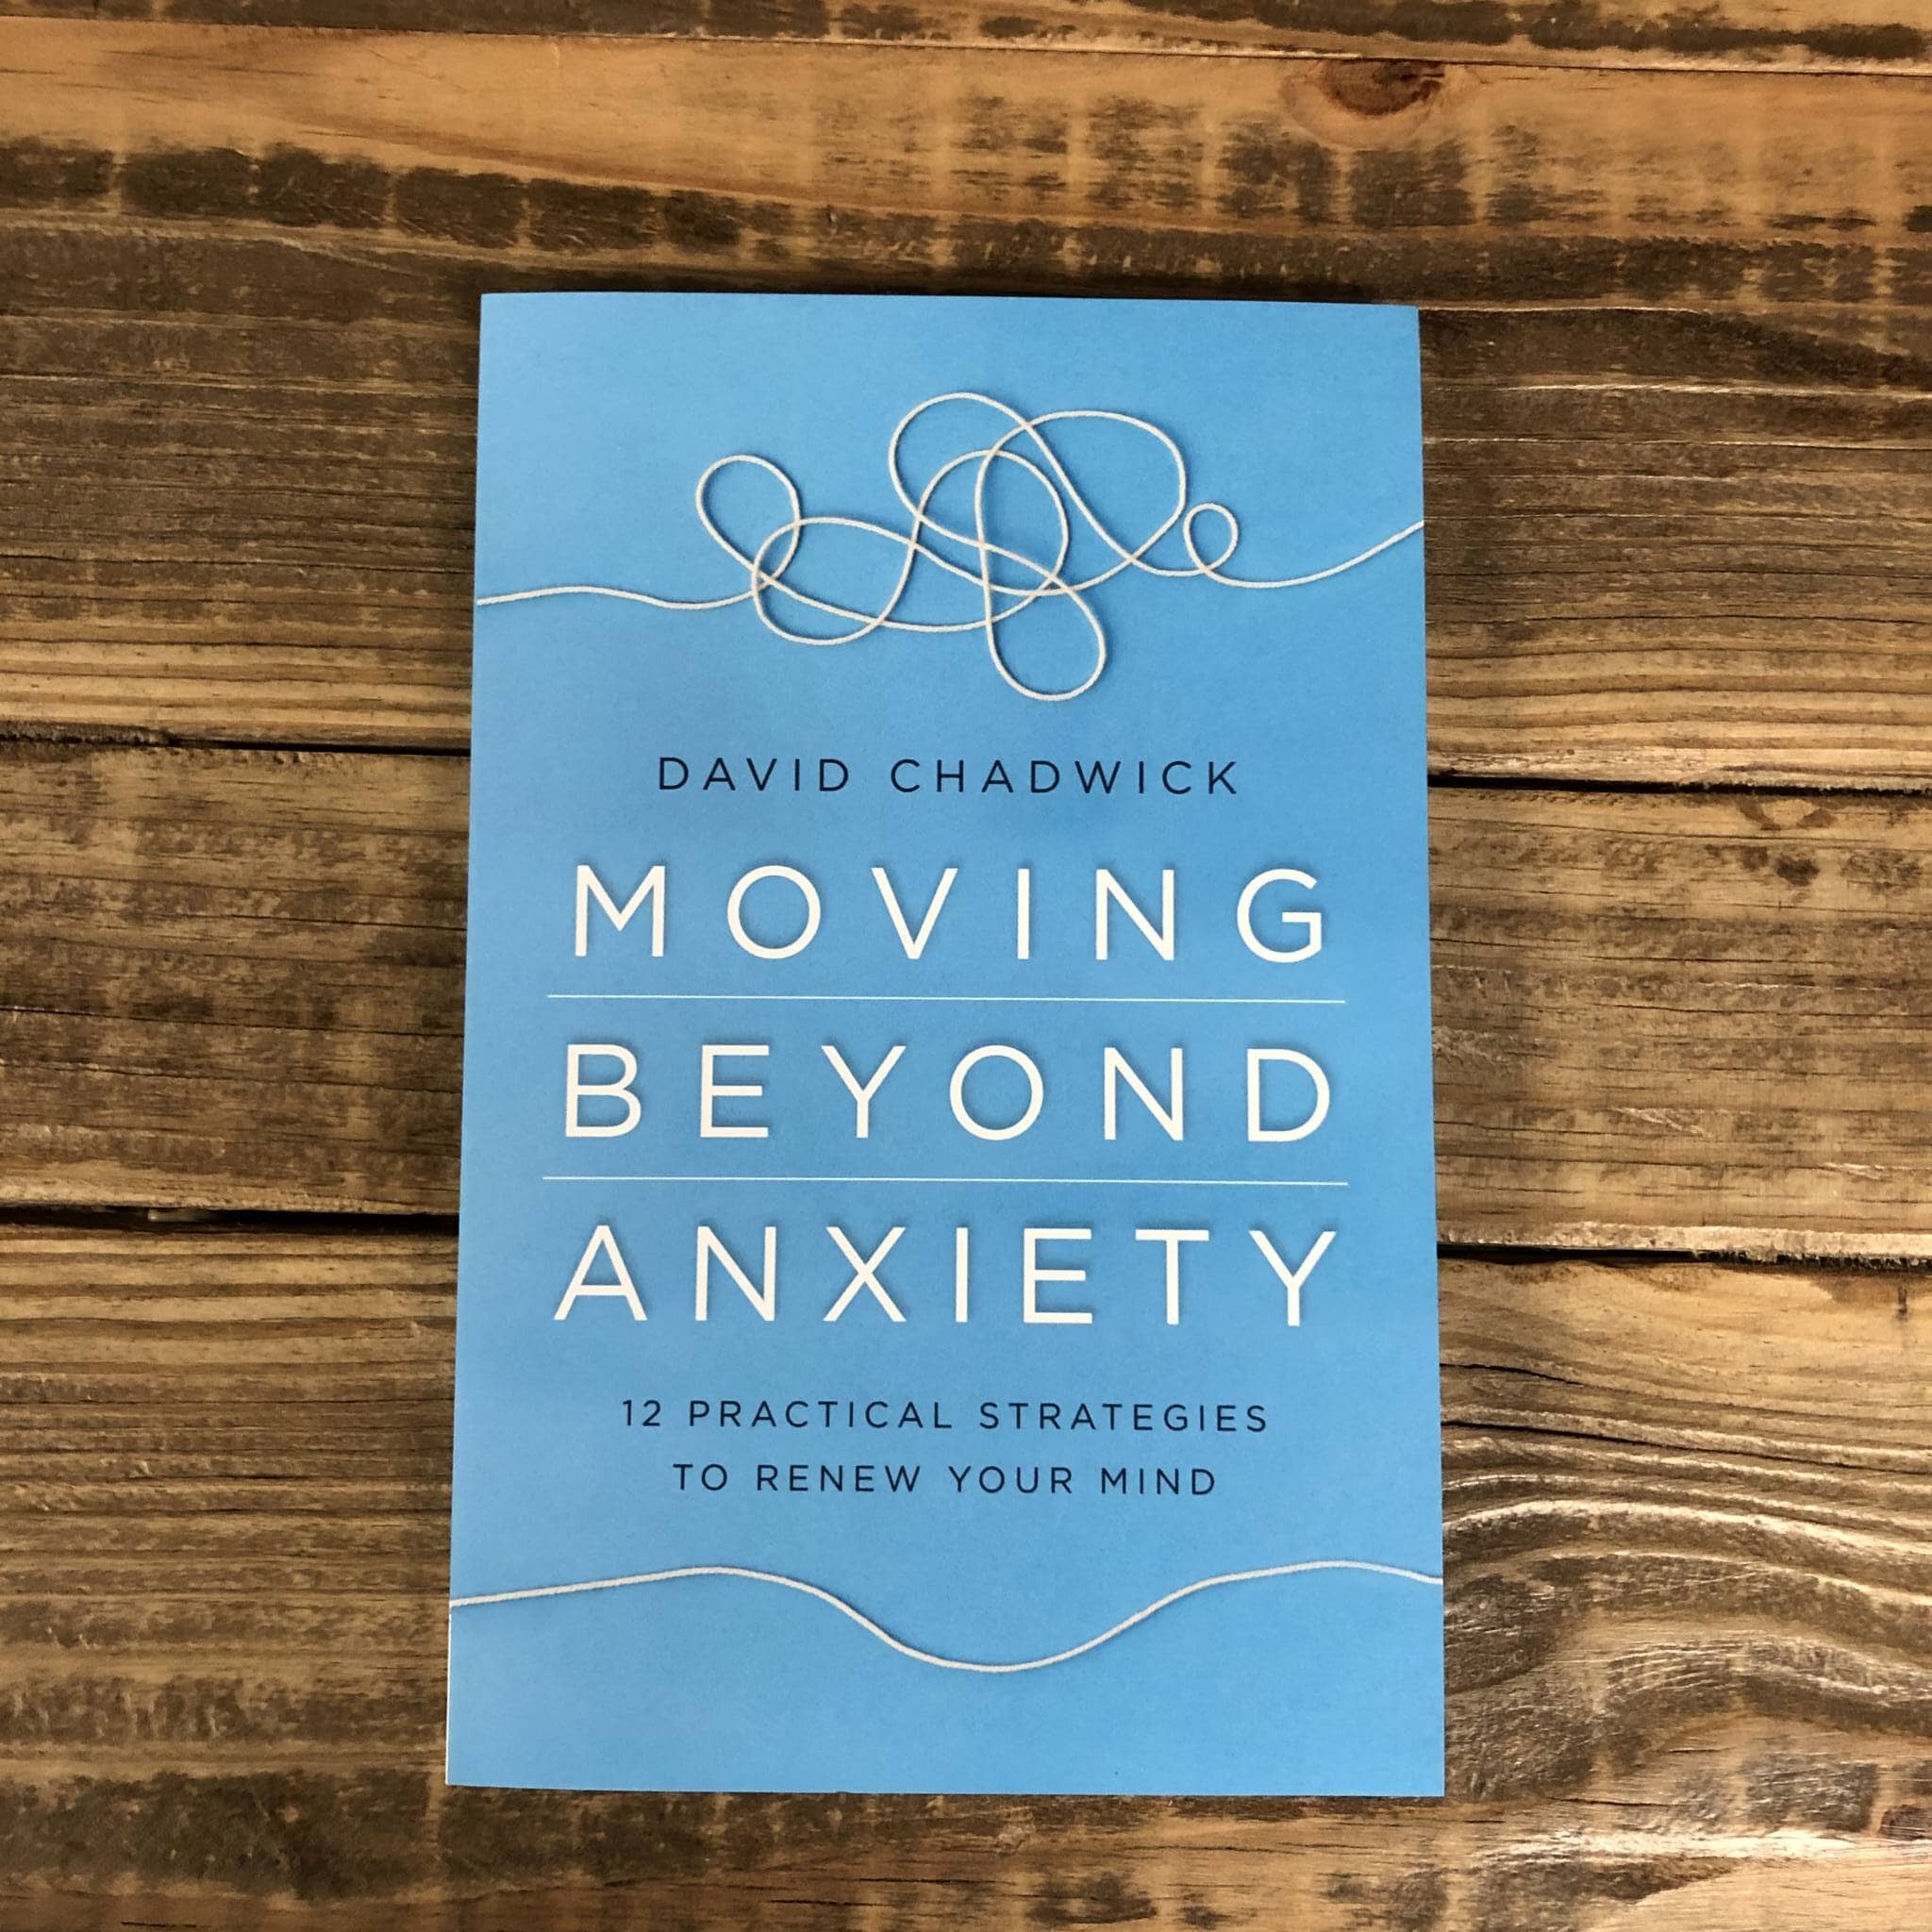 Moving Beyond Anxiety by David Chadwick